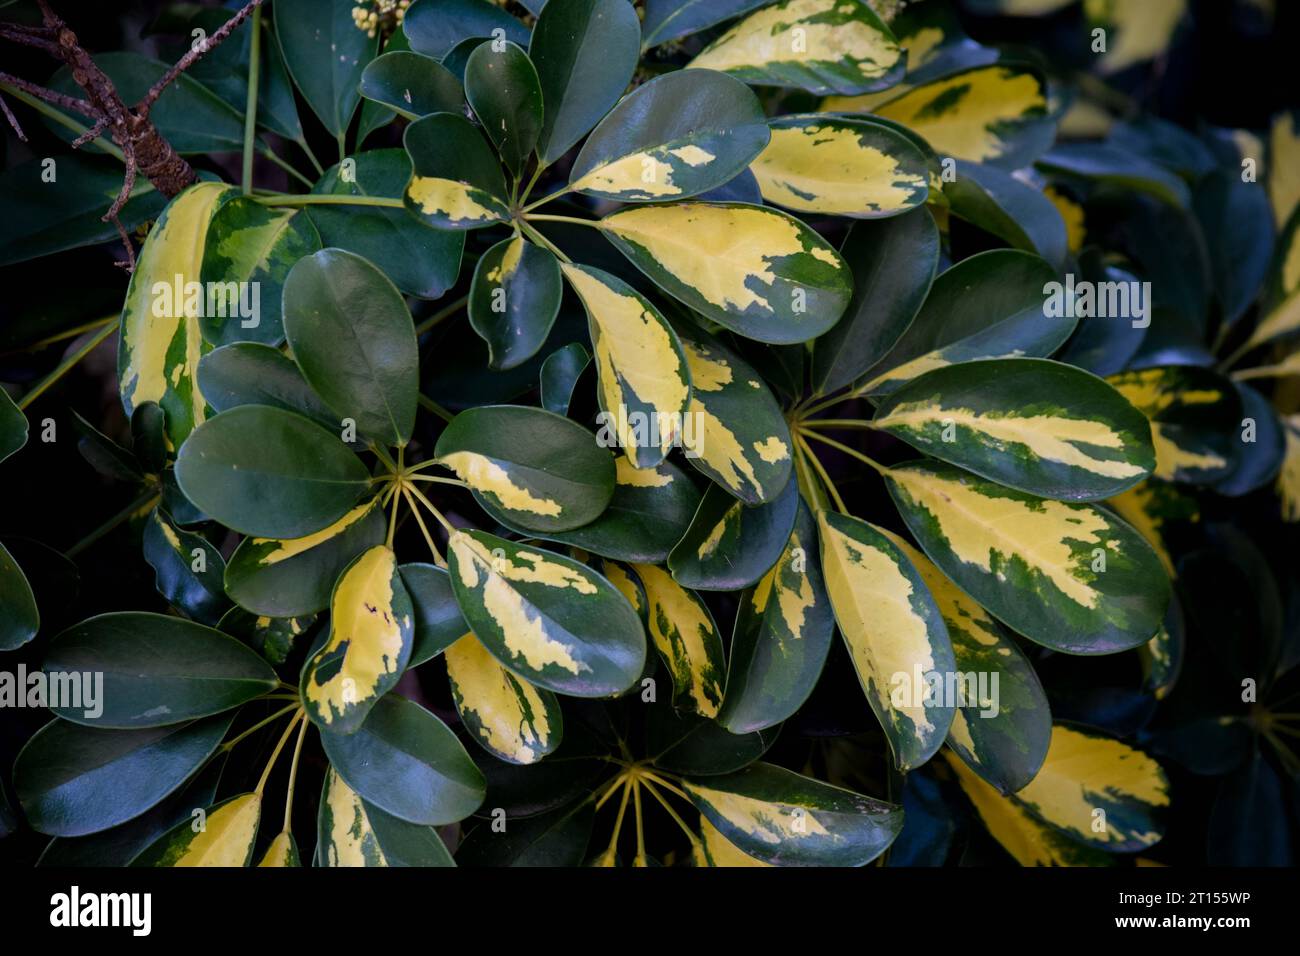 Closeup of the leaves of the Schefflera arboricola plant Stock Photo